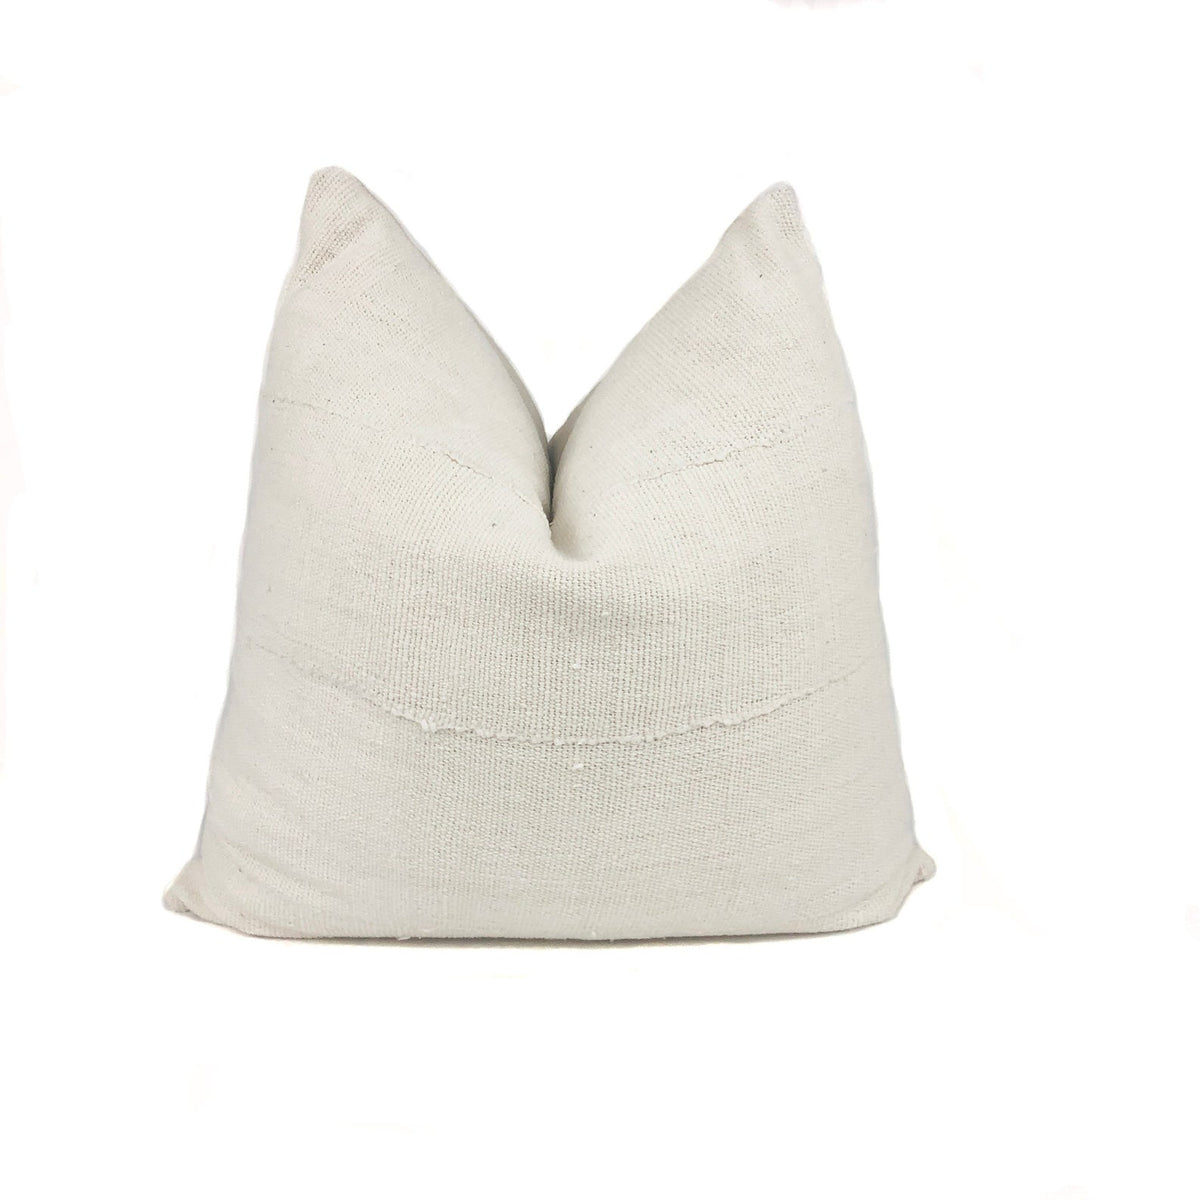 Pillow Combo #4 | 3 Pillow Covers